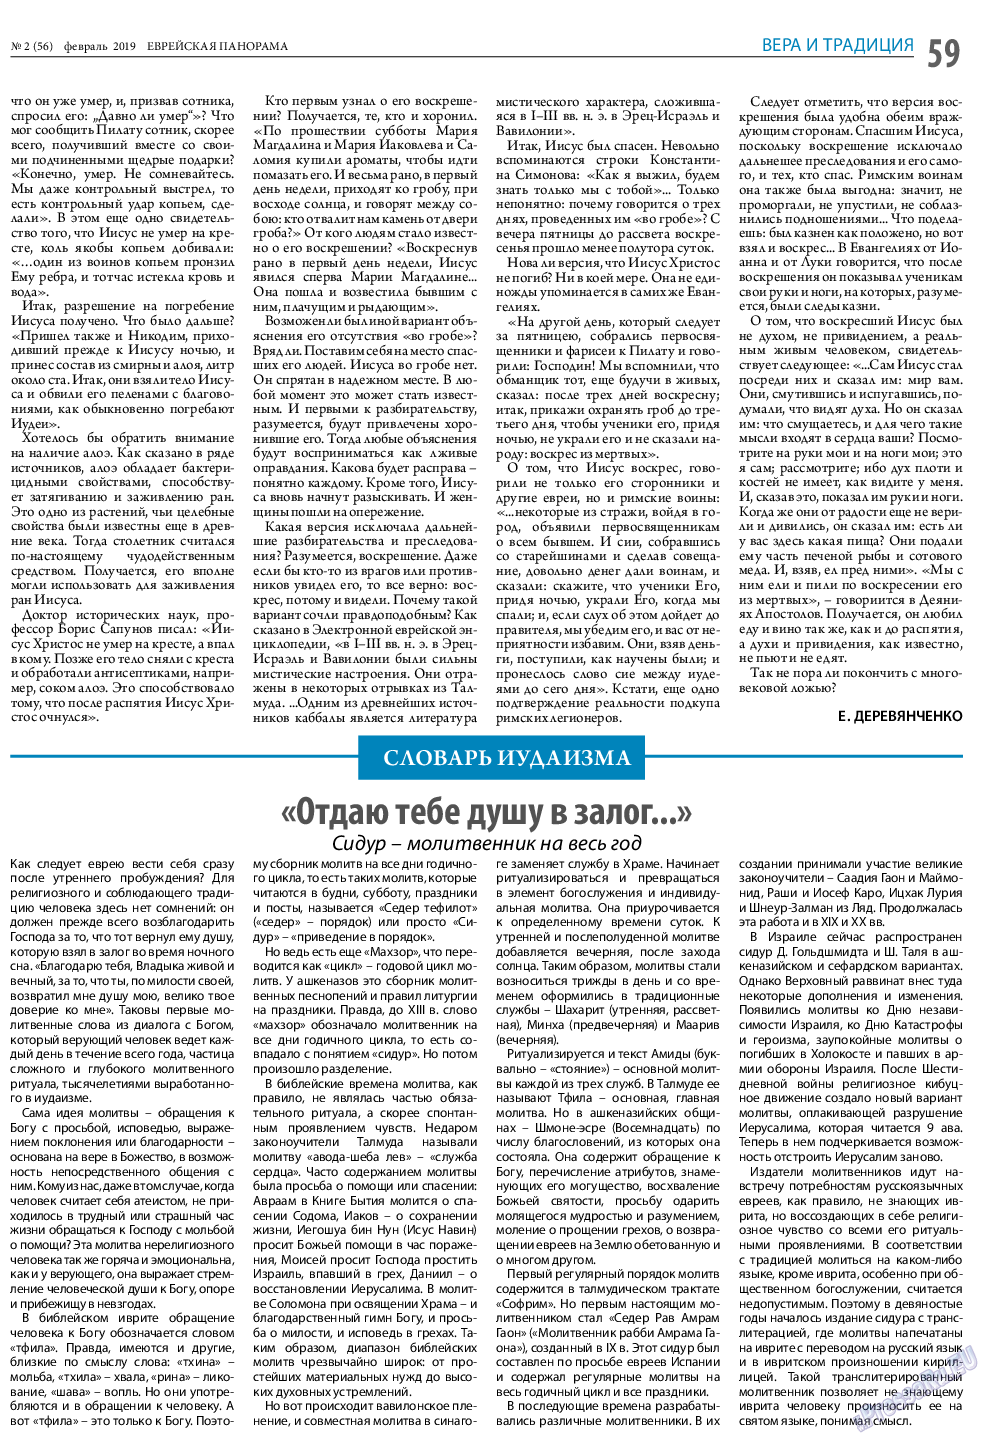 Еврейская панорама, газета. 2019 №2 стр.59